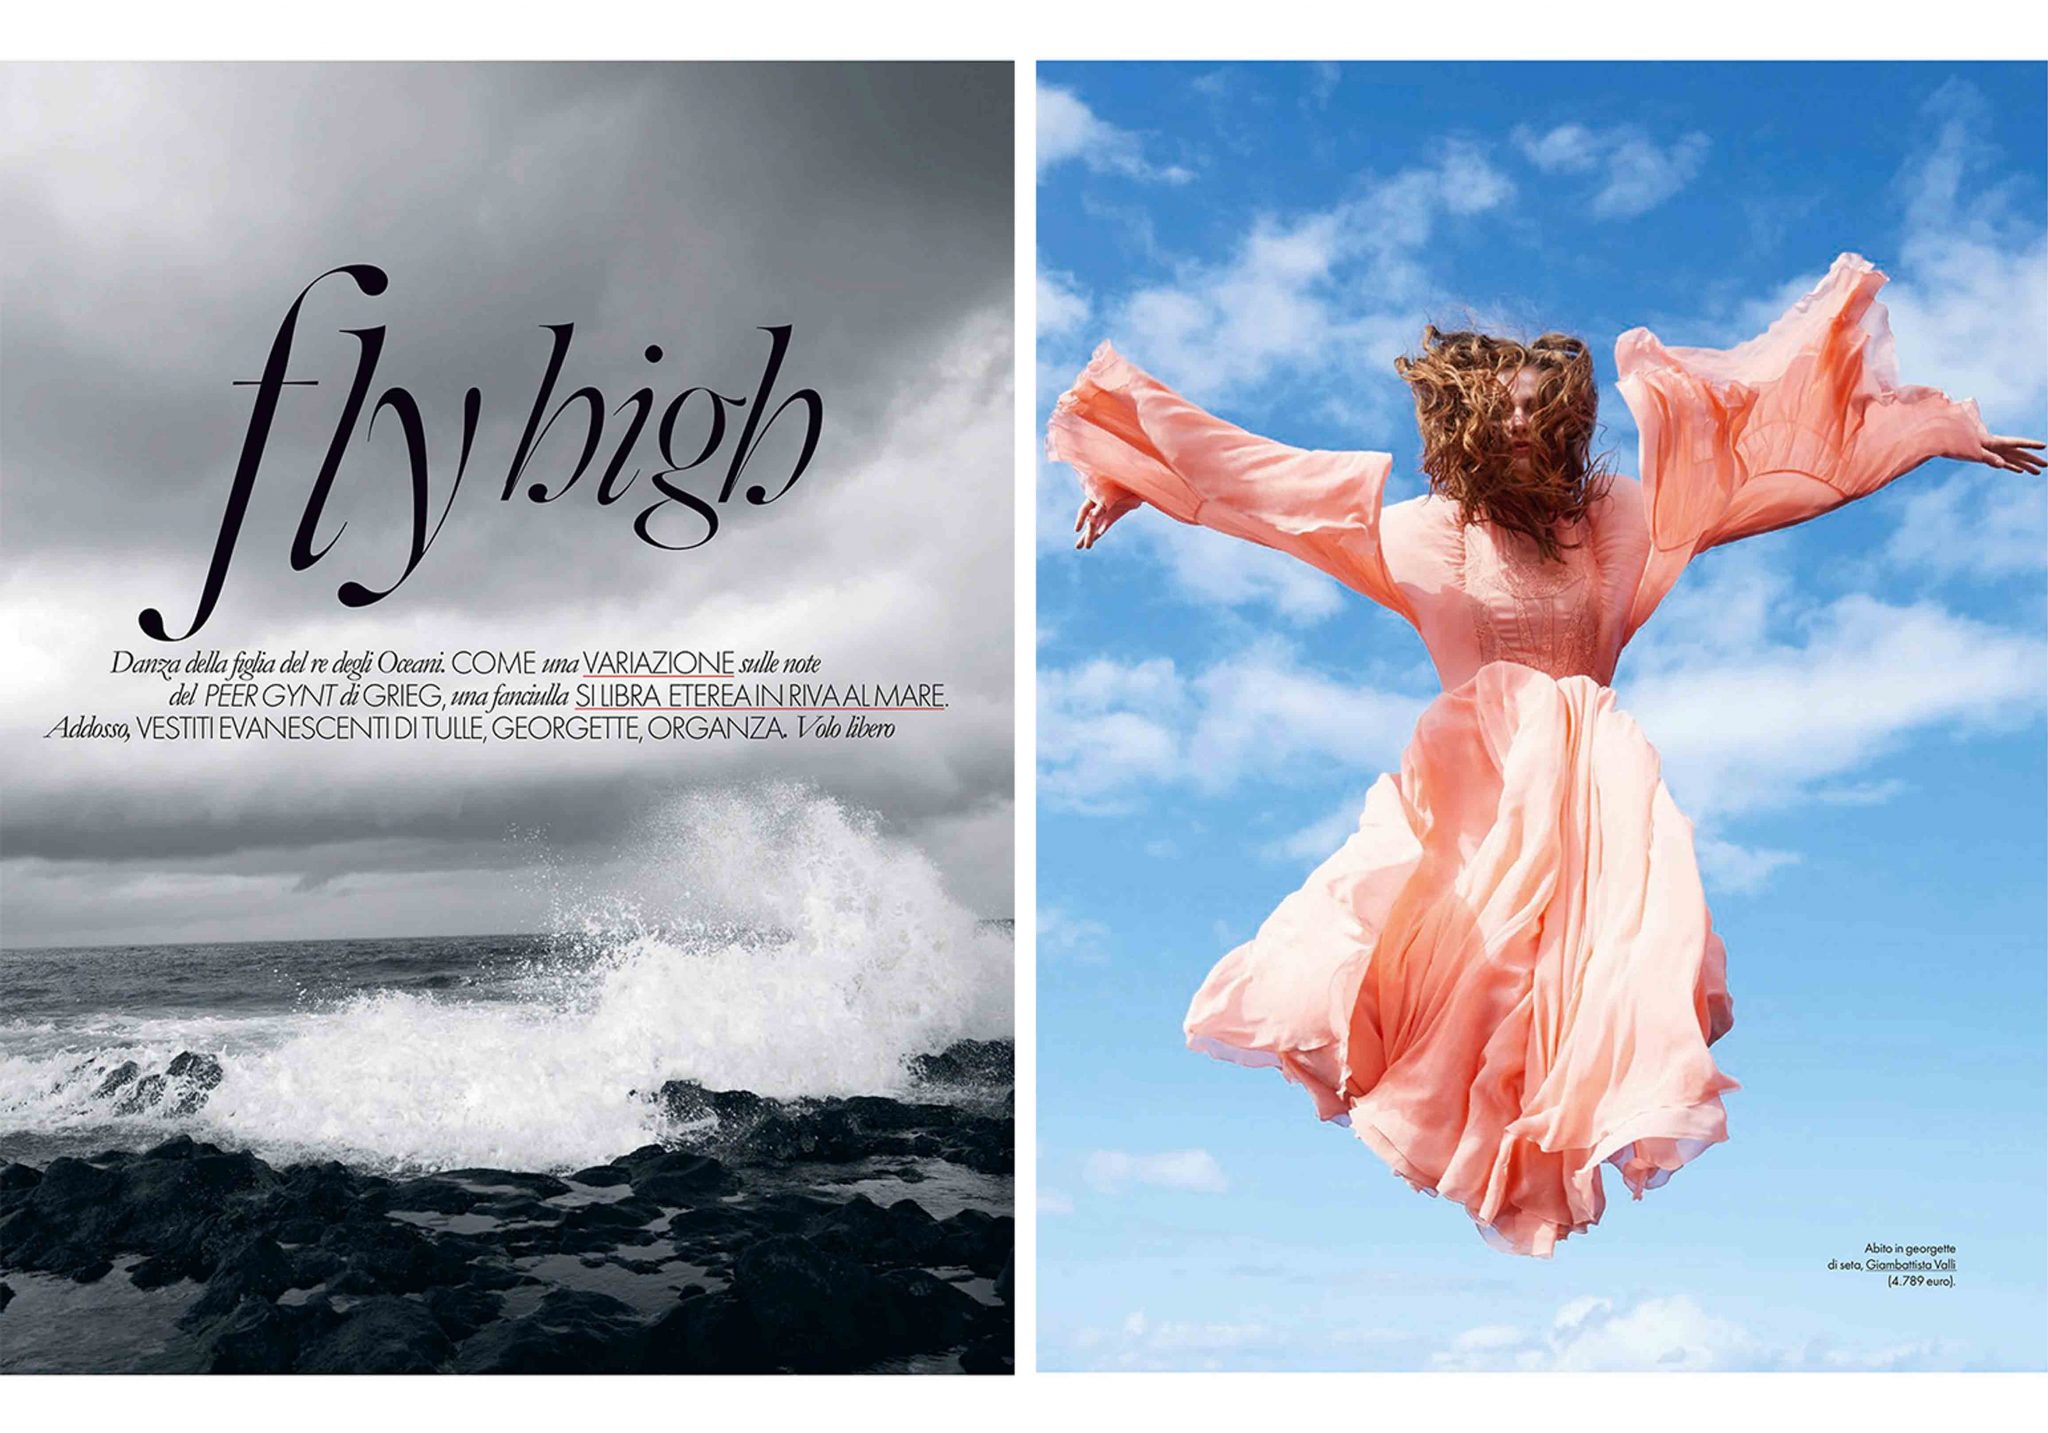 Koto Bolofo | Elle Italia: Flyhigh | 1